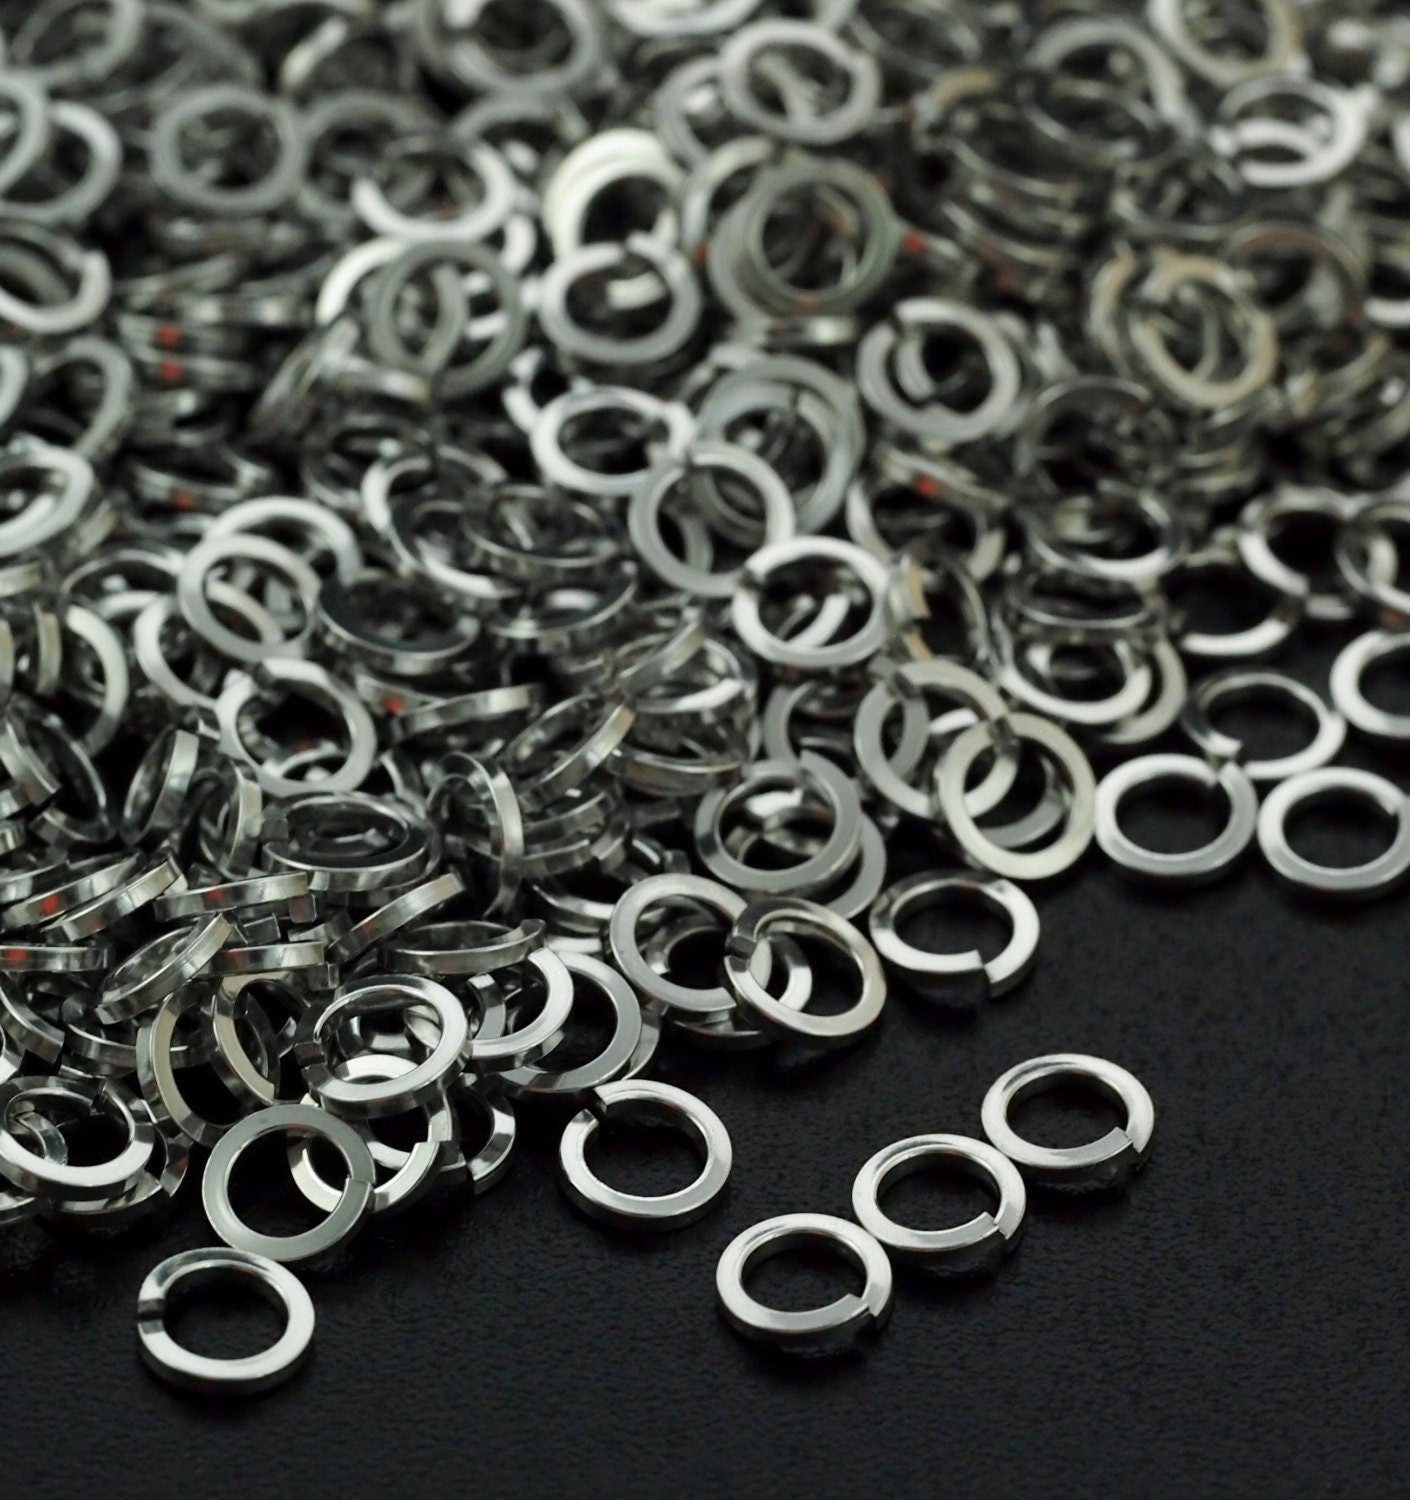 50 Square Stainless Steel Jump Rings Handmade in 14, 16, 18, 20